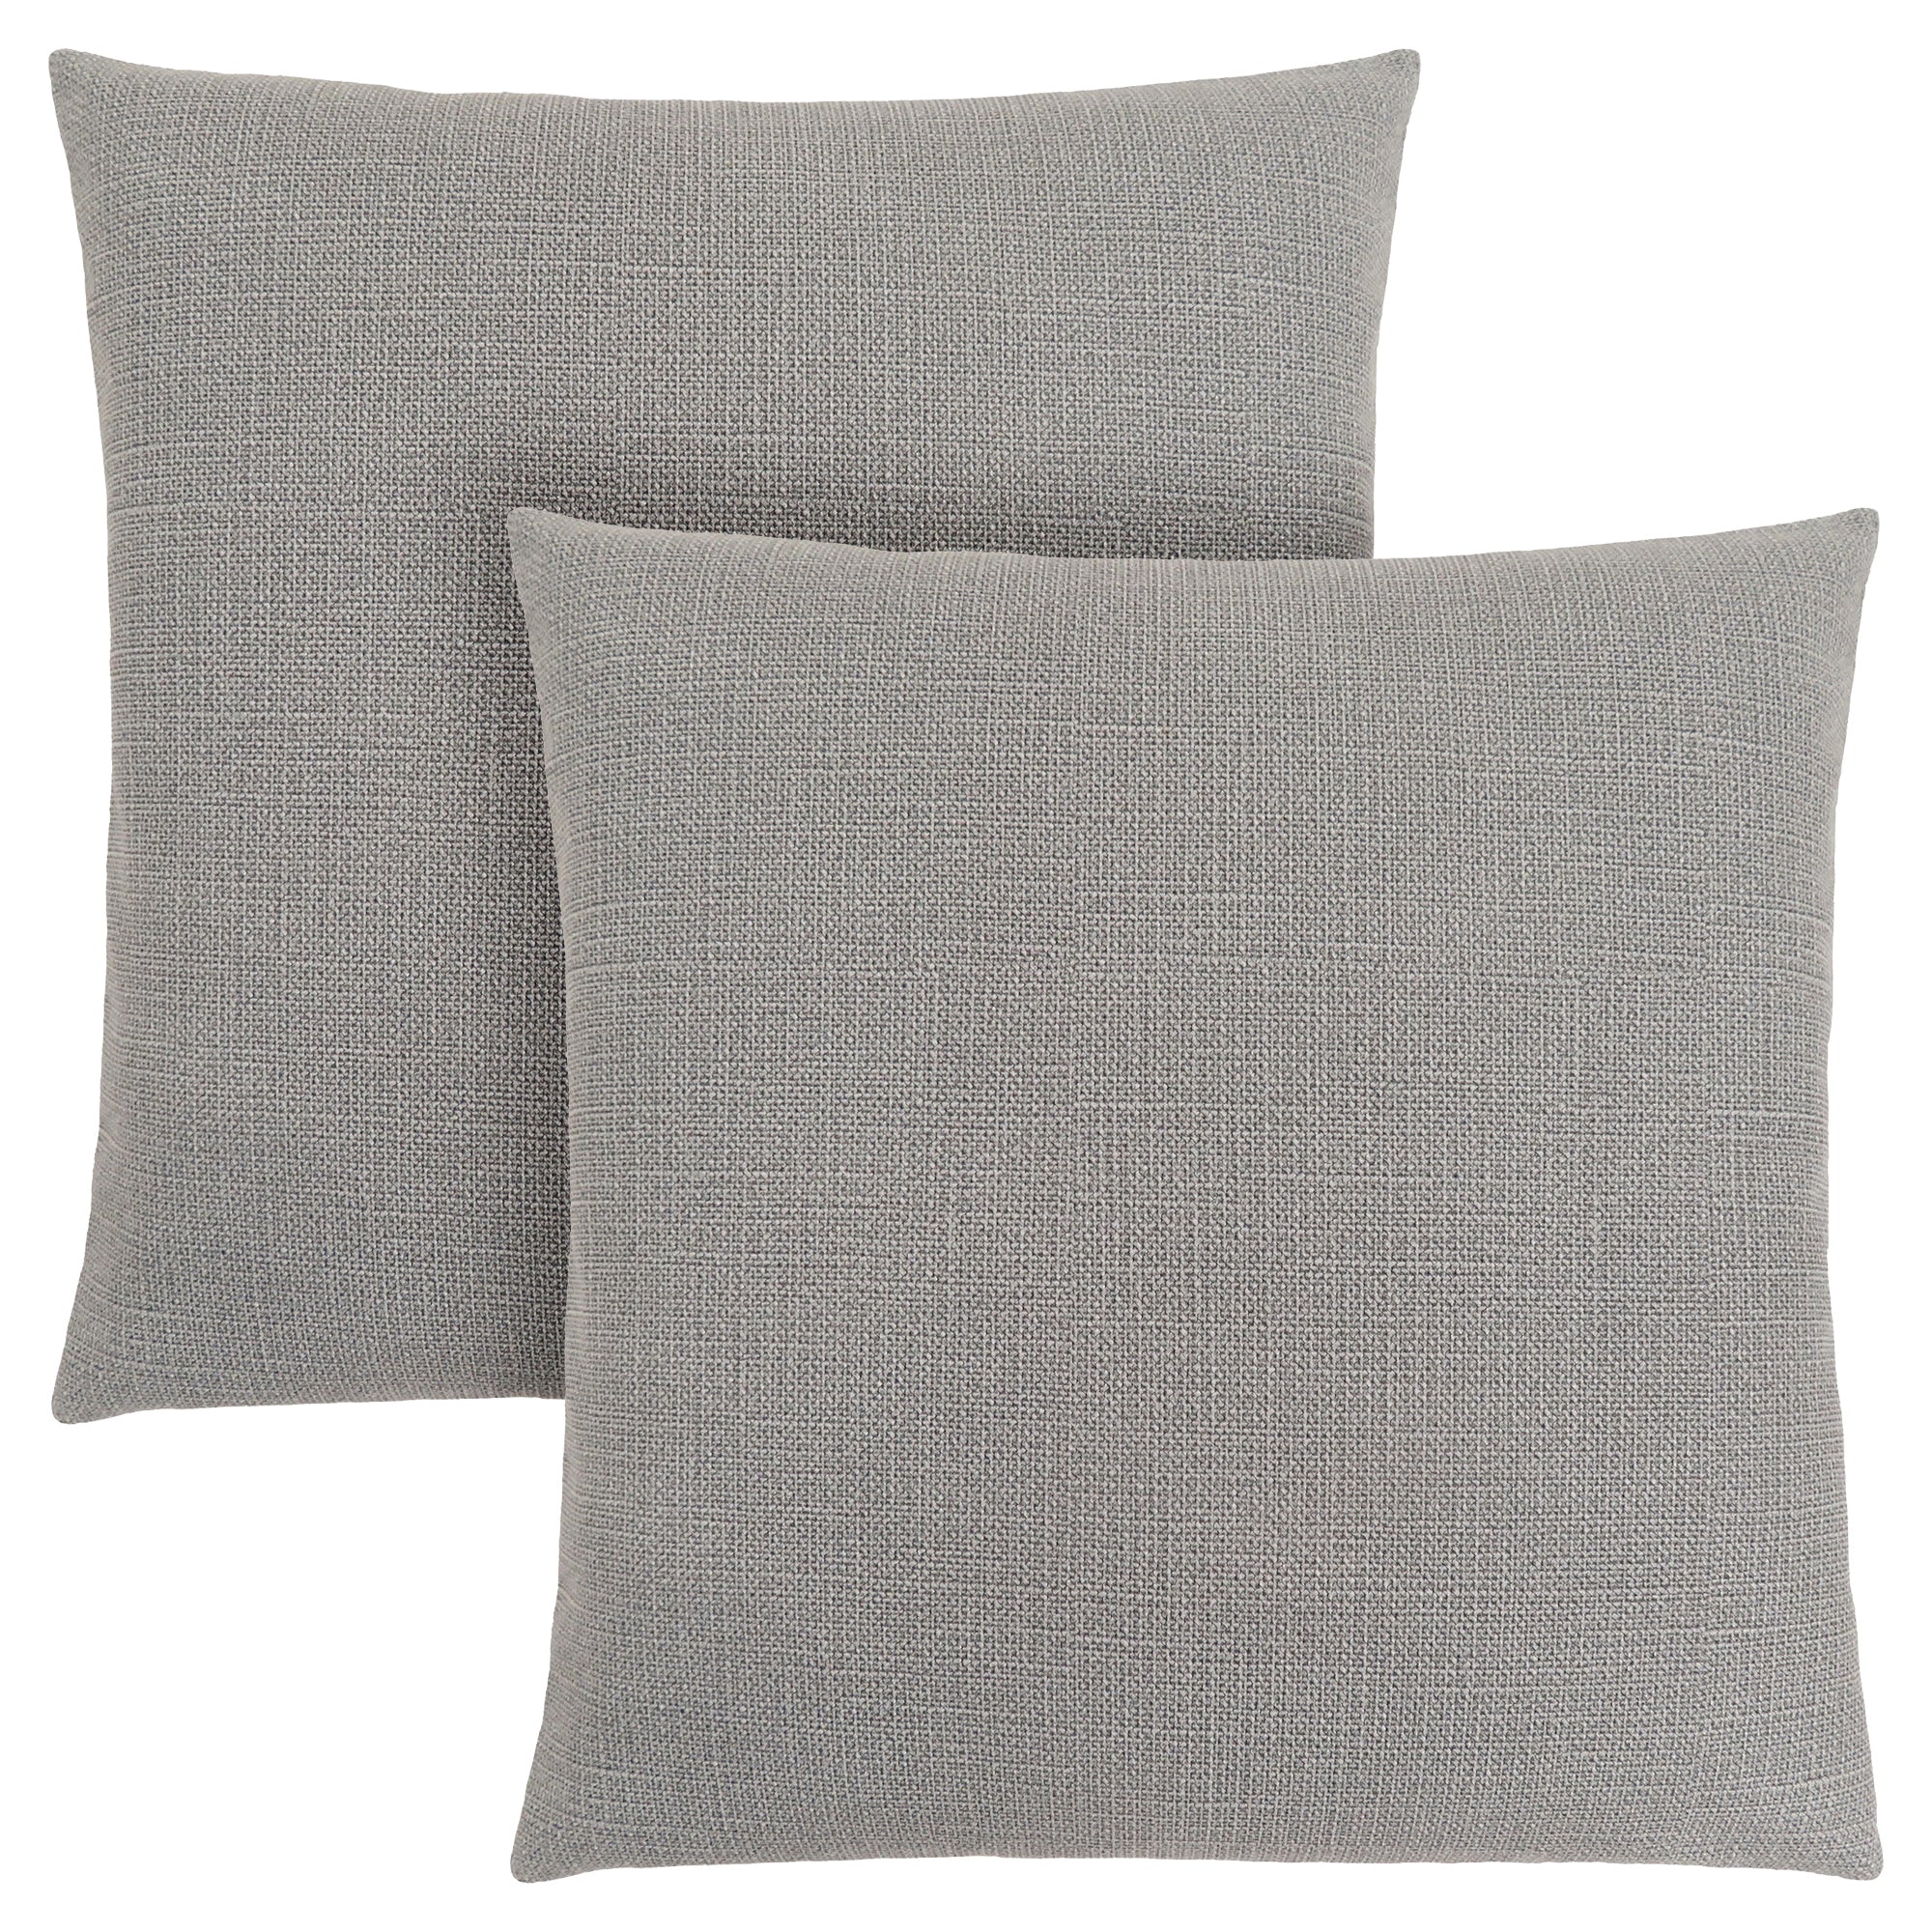 Pillow - 18X 18 / Patterned Light Grey / 2Pcs